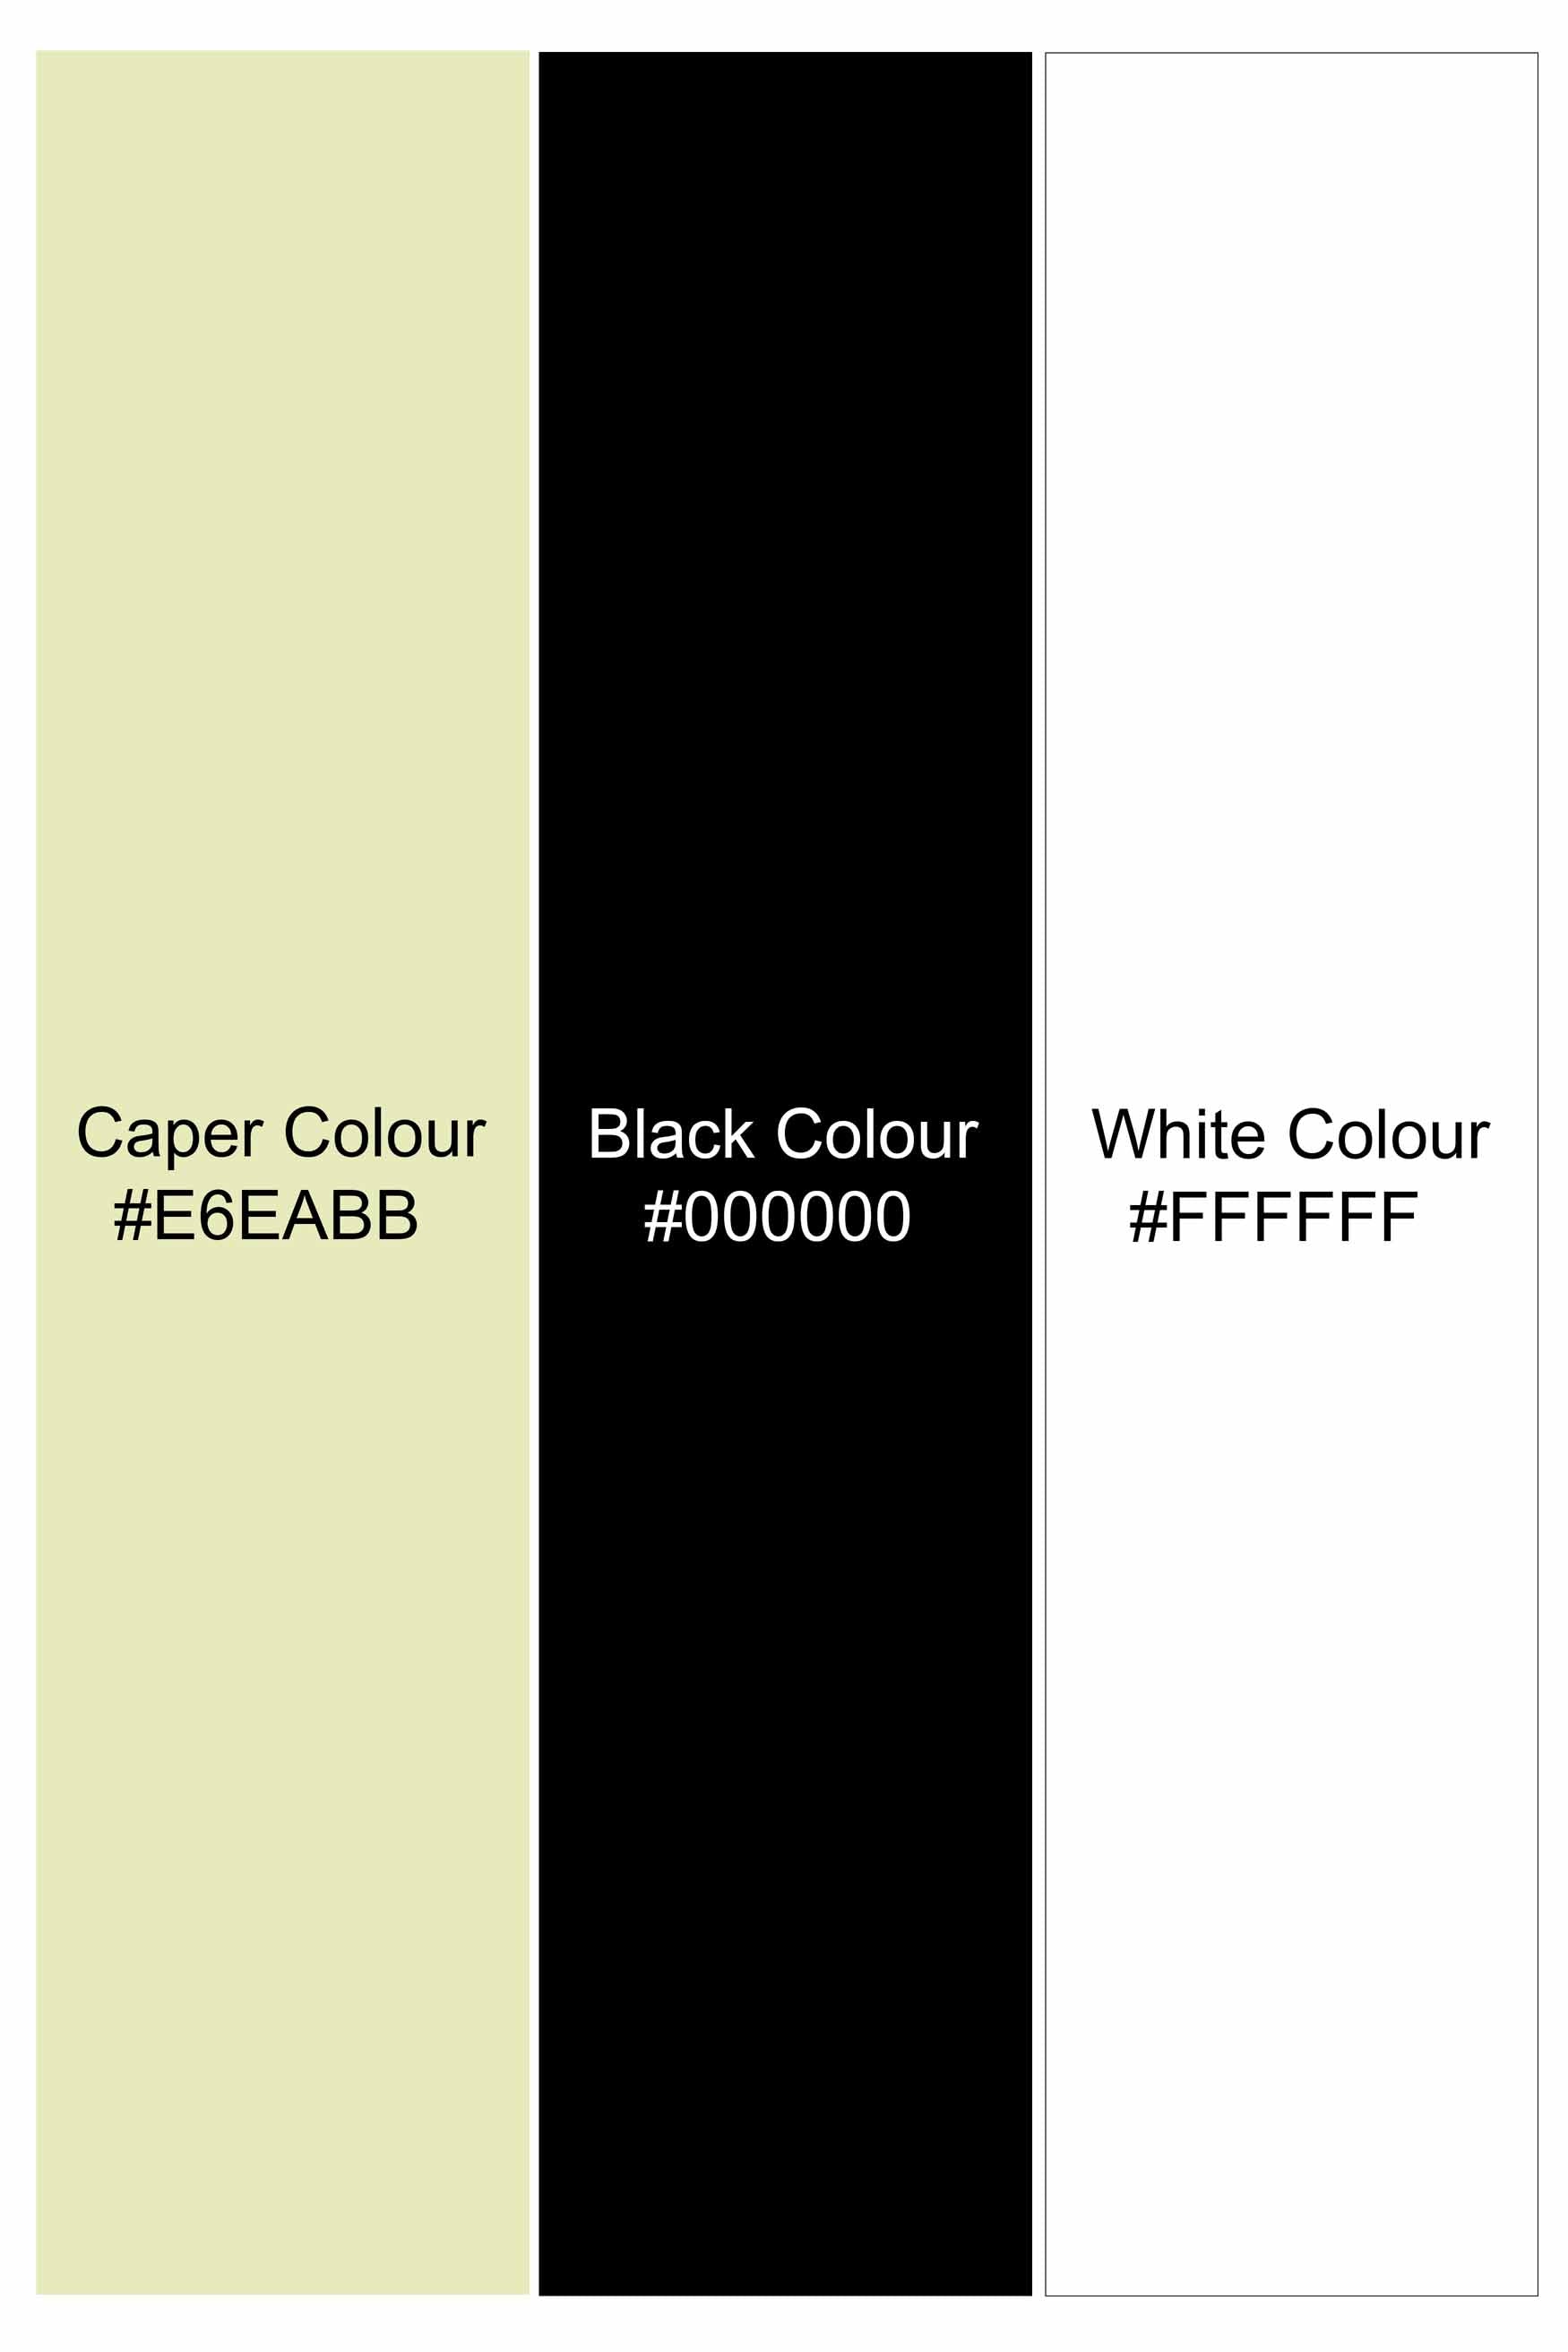 Caper Green with Black Checkered and Funky Patch work Twill Premium Cotton Designer Shirt 5700-BD-E173-38, 5700-BD-E173-H-38, 5700-BD-E173-39, 5700-BD-E173-H-39, 5700-BD-E173-40, 5700-BD-E173-H-40, 5700-BD-E173-42, 5700-BD-E173-H-42, 5700-BD-E173-44, 5700-BD-E173-H-44, 5700-BD-E173-46, 5700-BD-E173-H-46, 5700-BD-E173-48, 5700-BD-E173-H-48, 5700-BD-E173-50, 5700-BD-E173-H-50, 5700-BD-E173-52, 5700-BD-E173-H-52